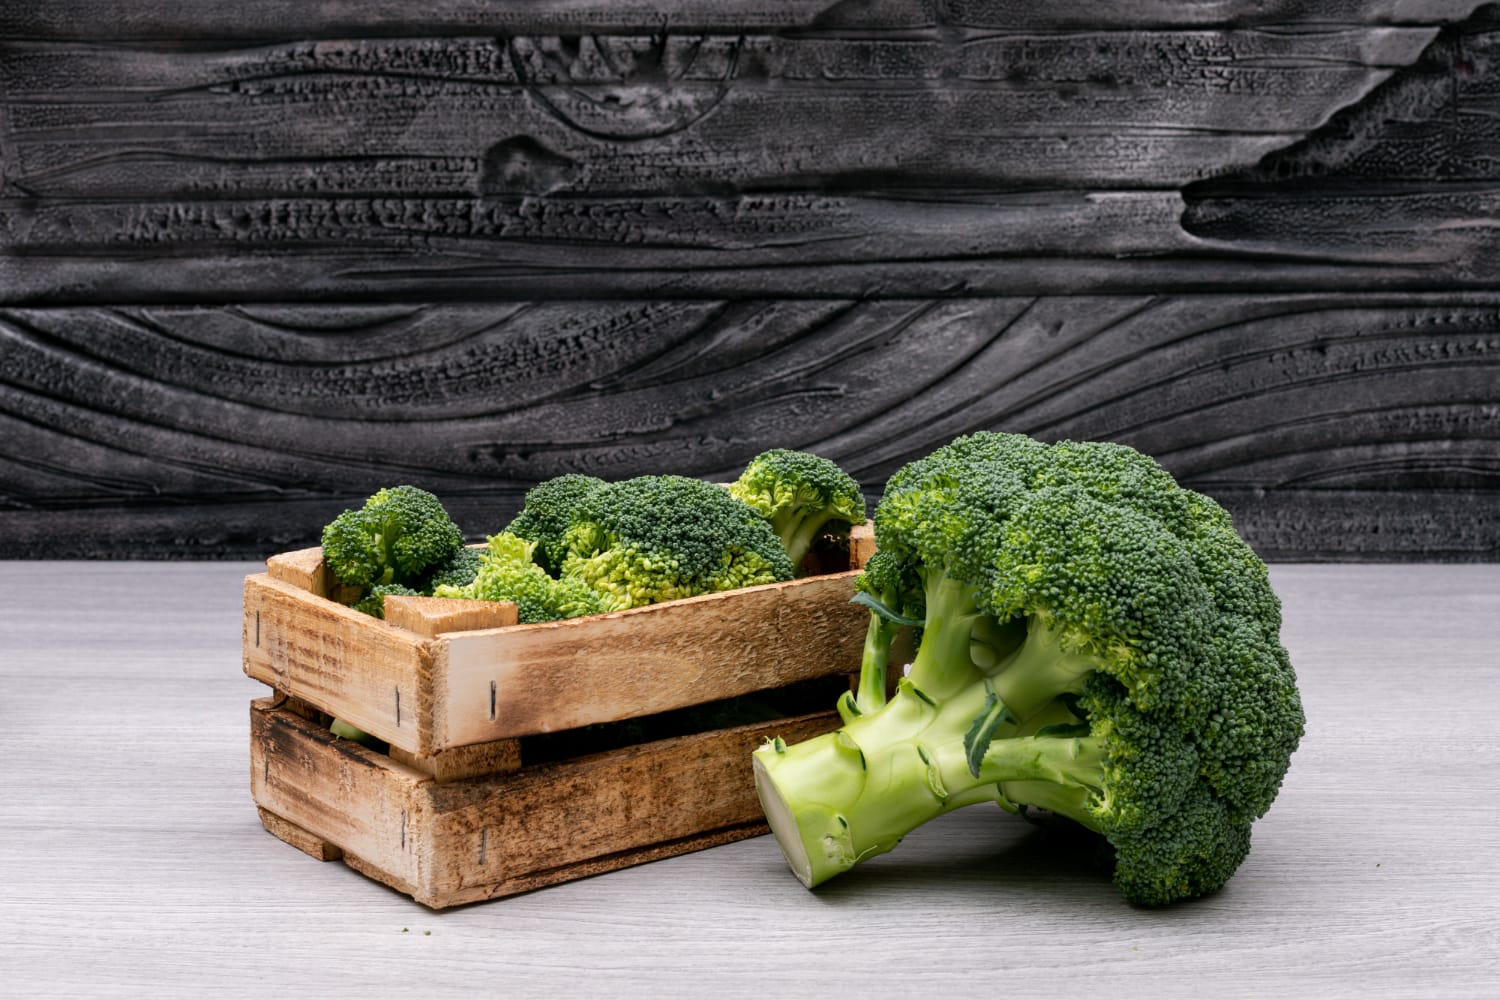 Bunches of broccoli in wooden box near the whole fresh broccoli